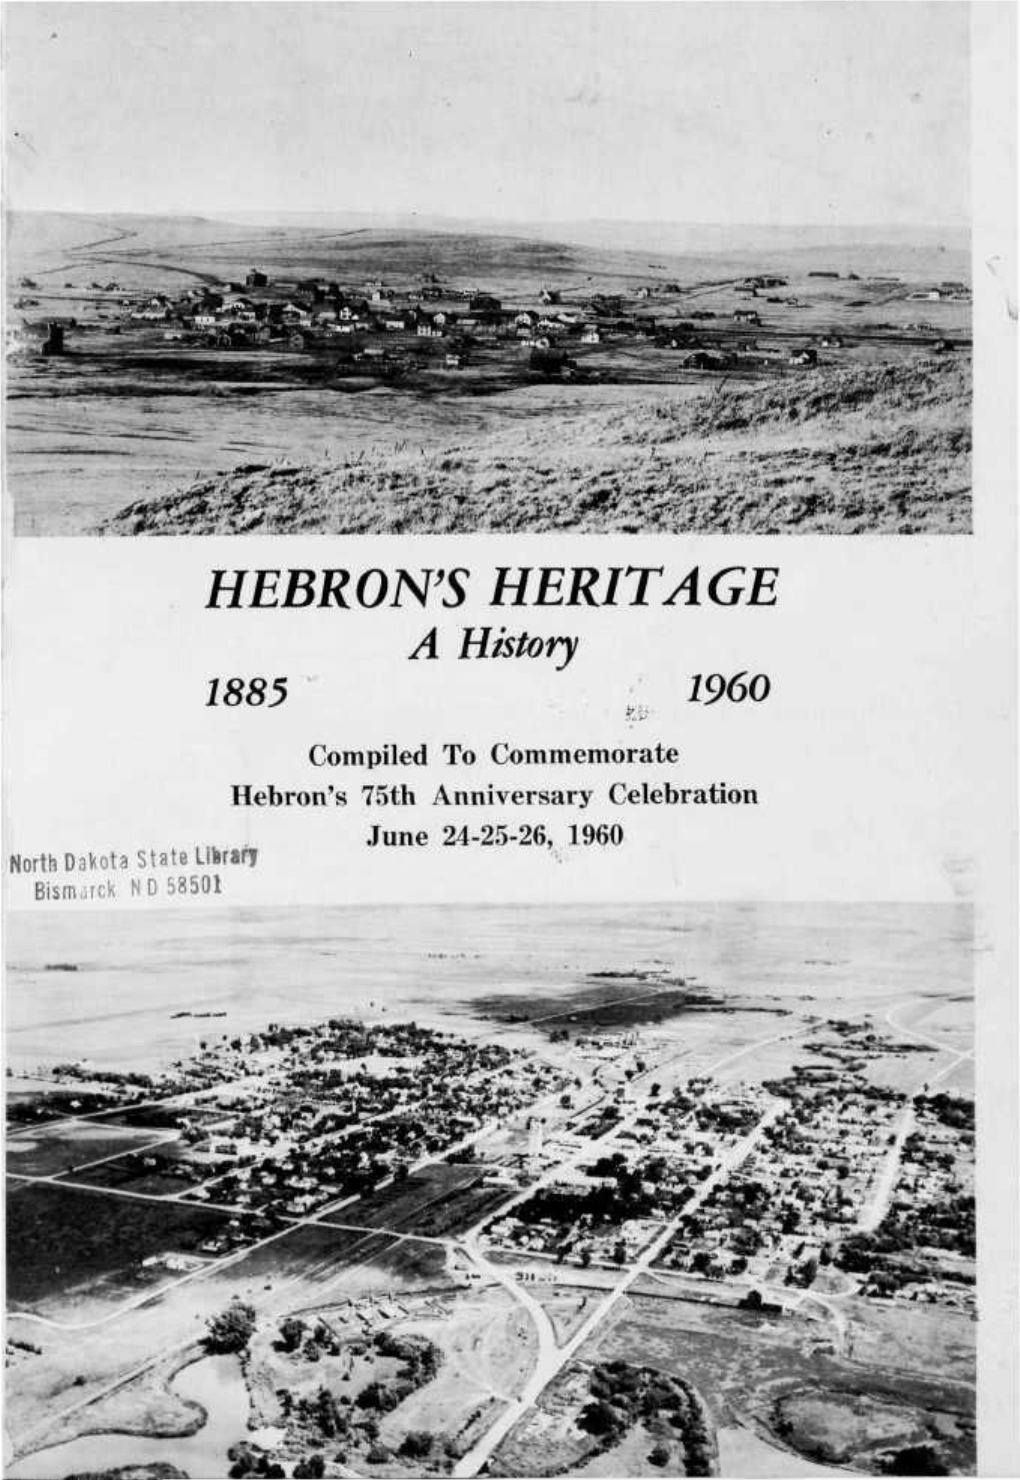 Hebron's Heritage